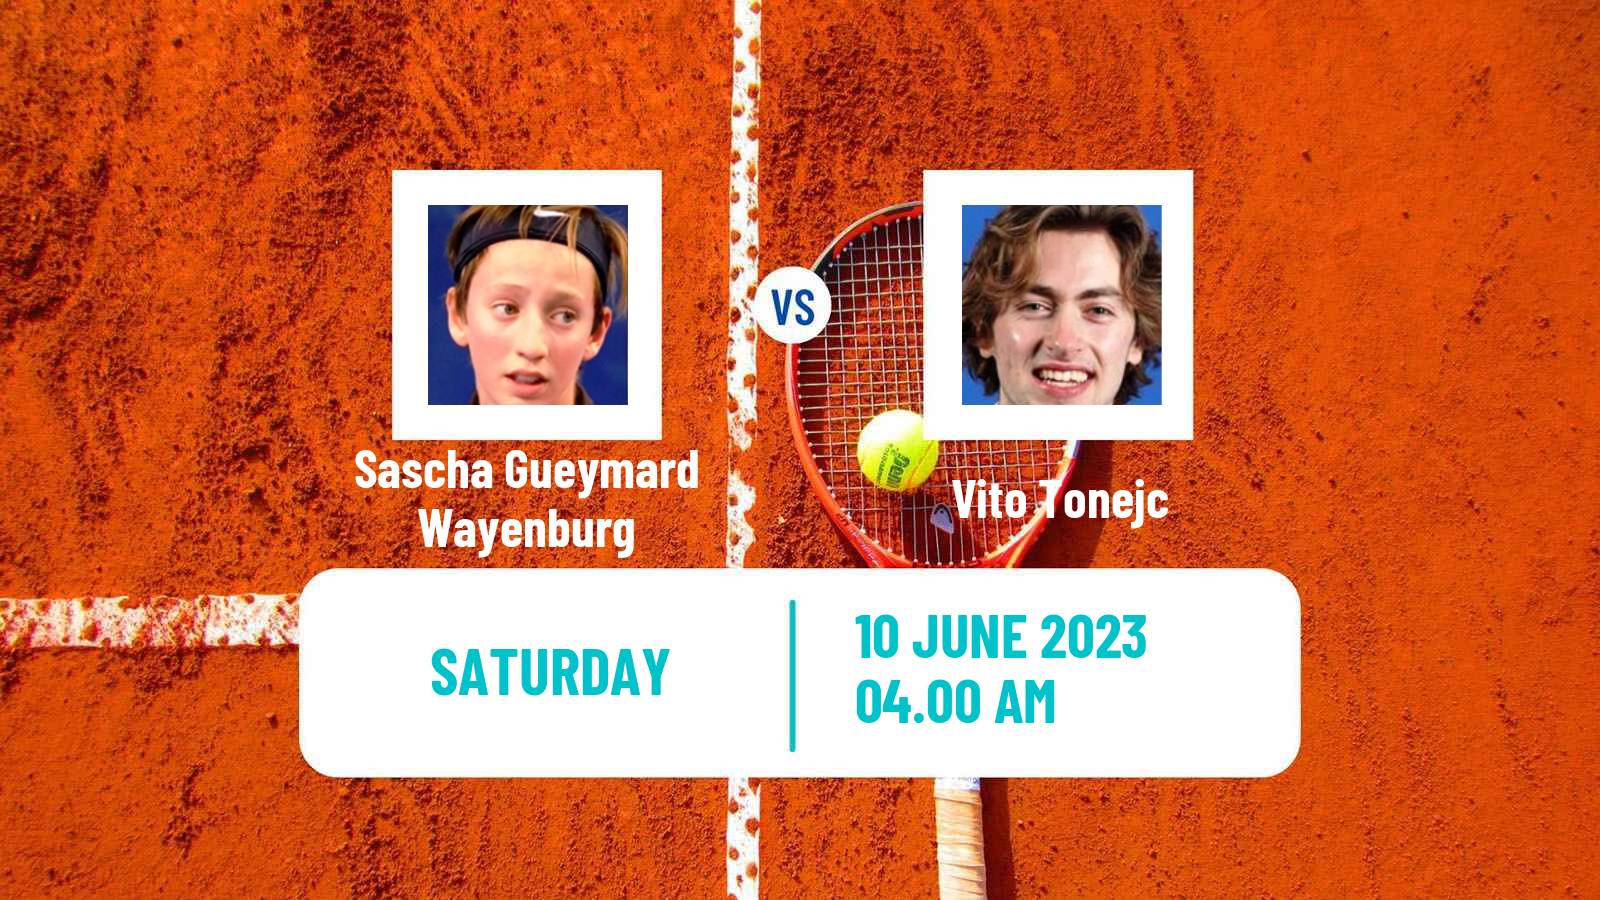 Tennis ITF M25 Skopje Men Sascha Gueymard Wayenburg - Vito Tonejc